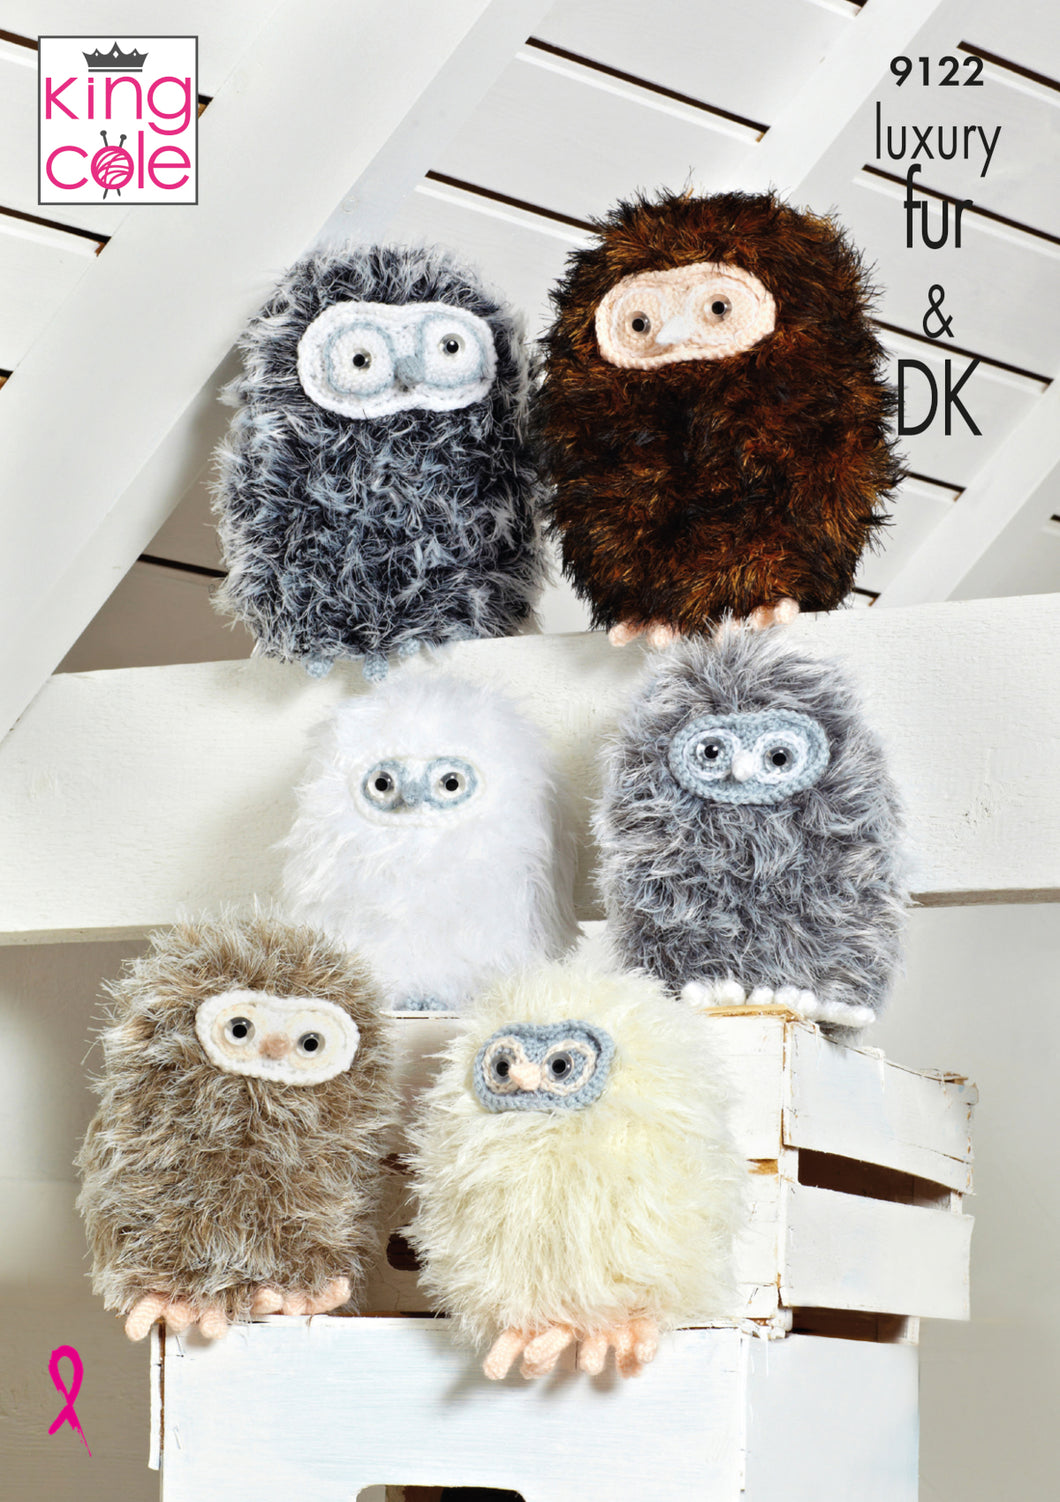 King Cole Luxury Fur Knitting Pattern - Baby Owls (9122)